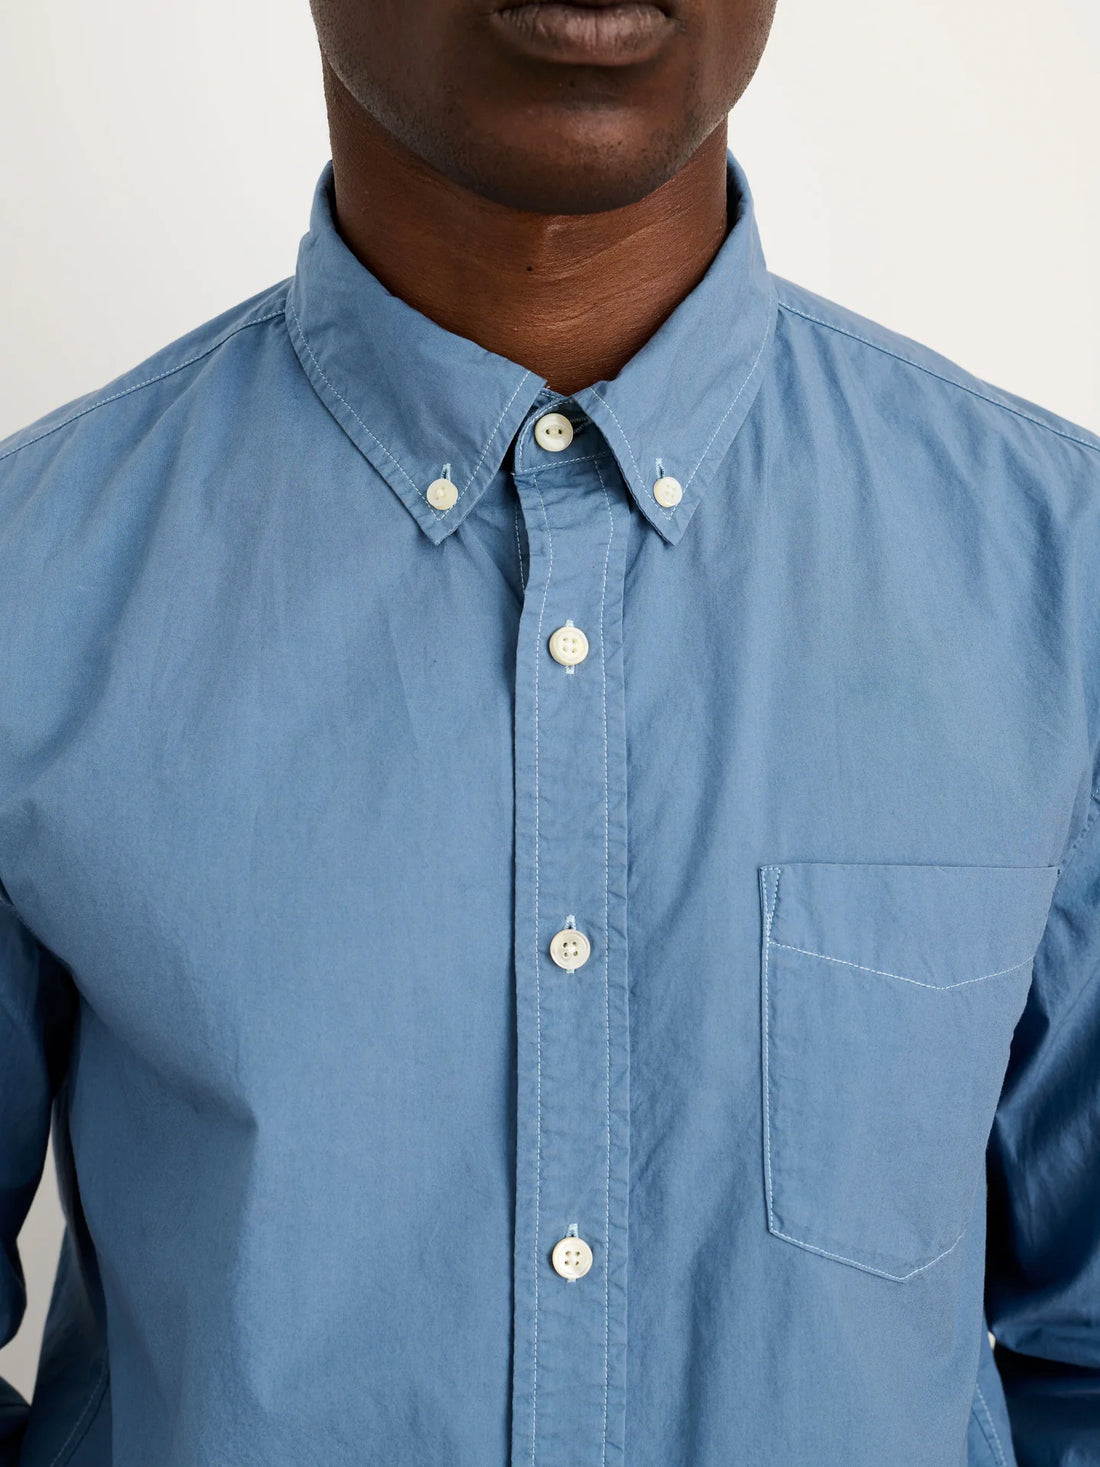 Mill Shirt in Paper Poplin- Faded Delft Blue